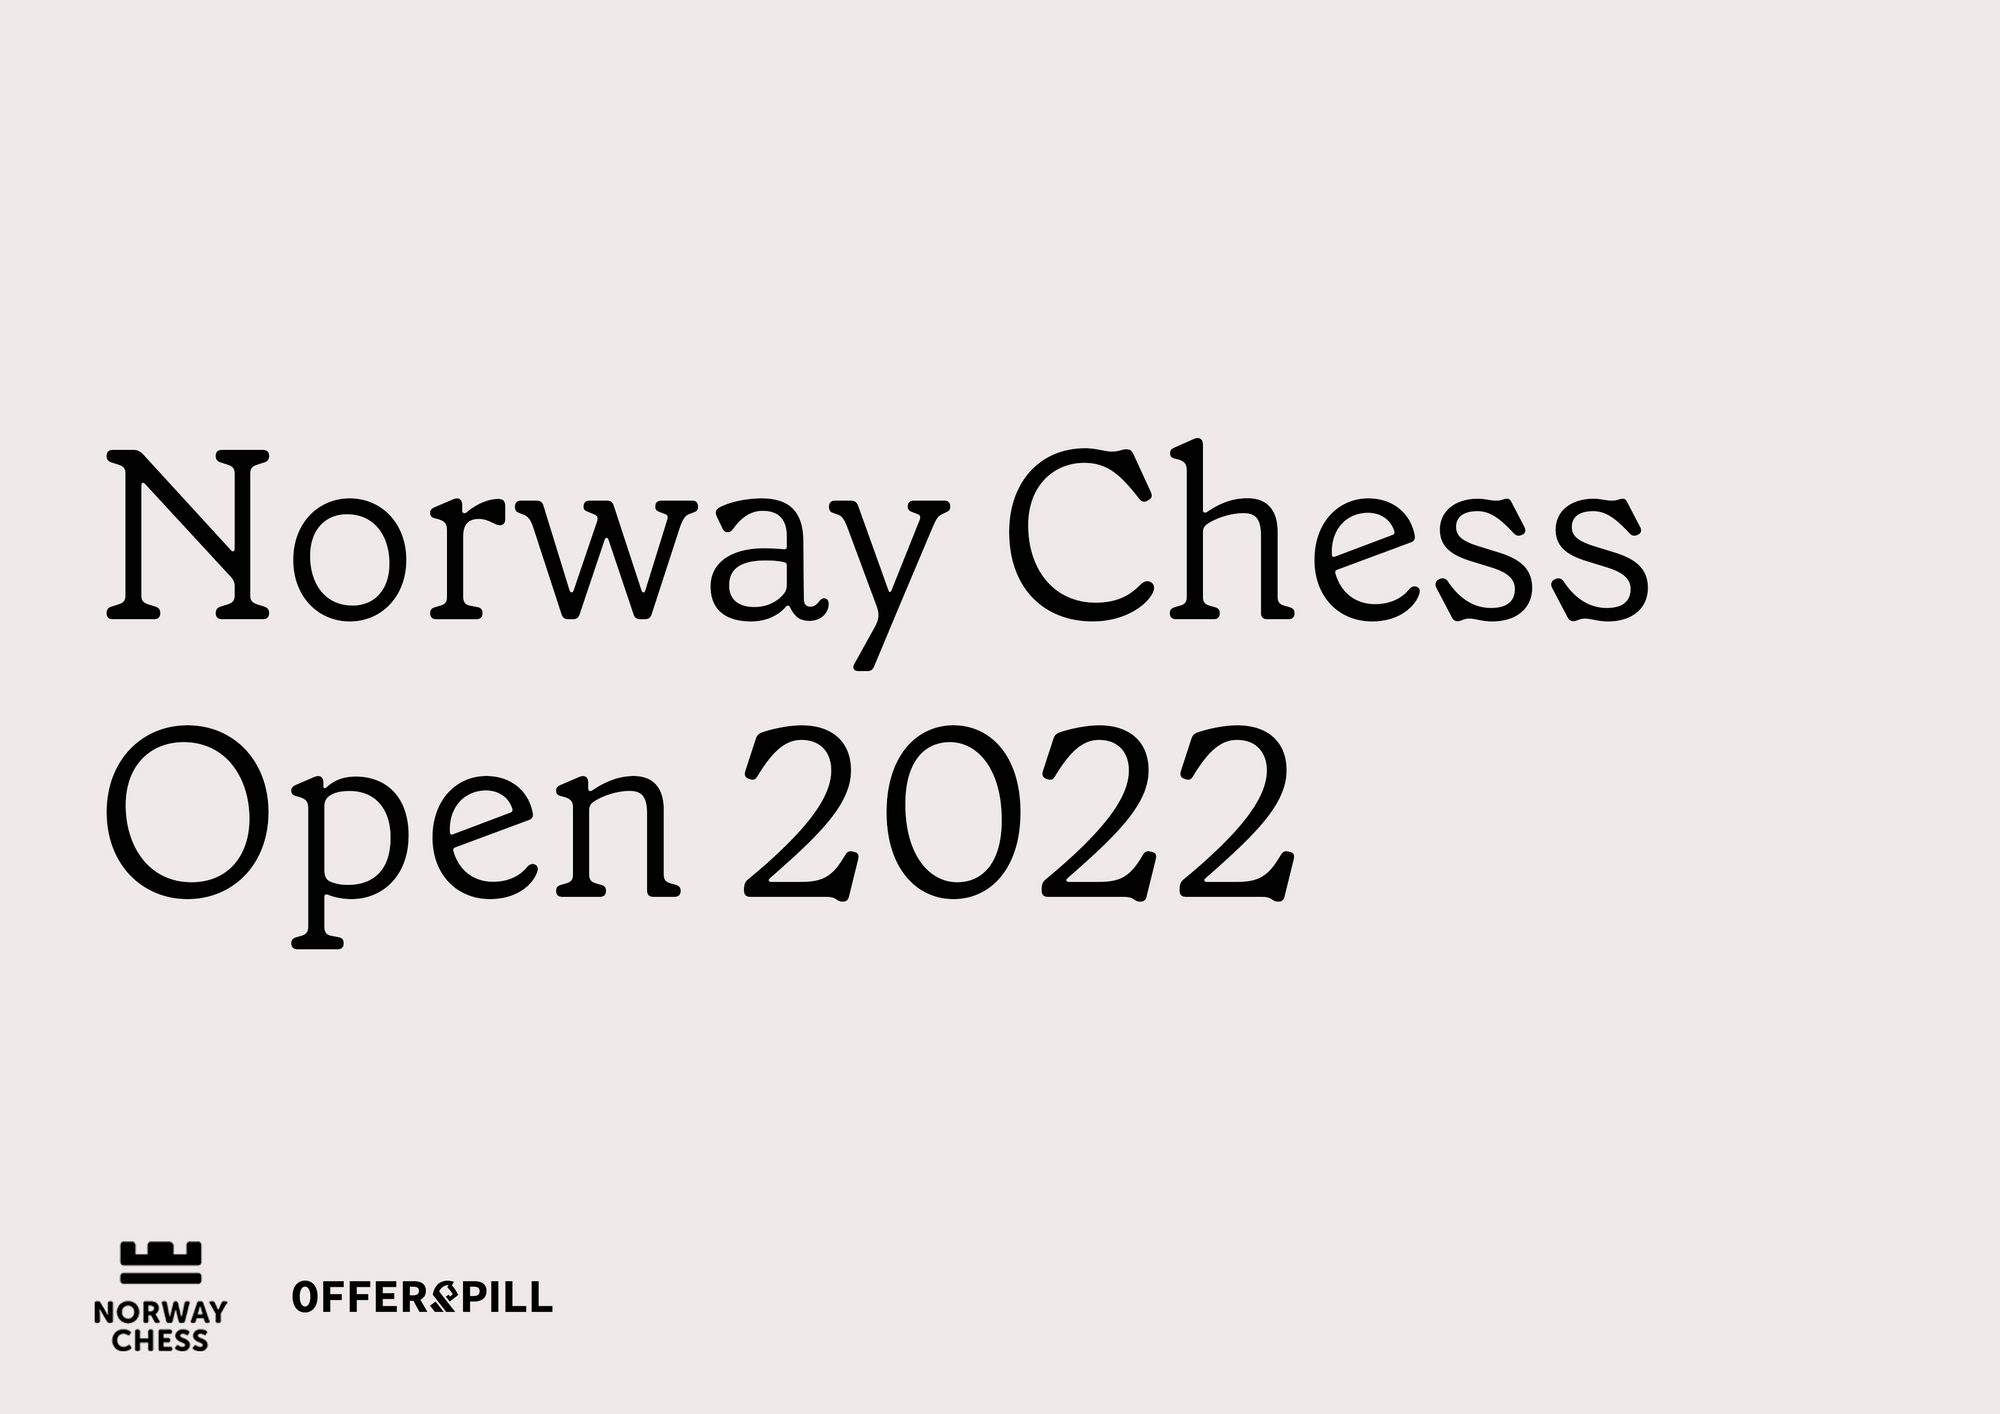 Norway Chess Open 2022